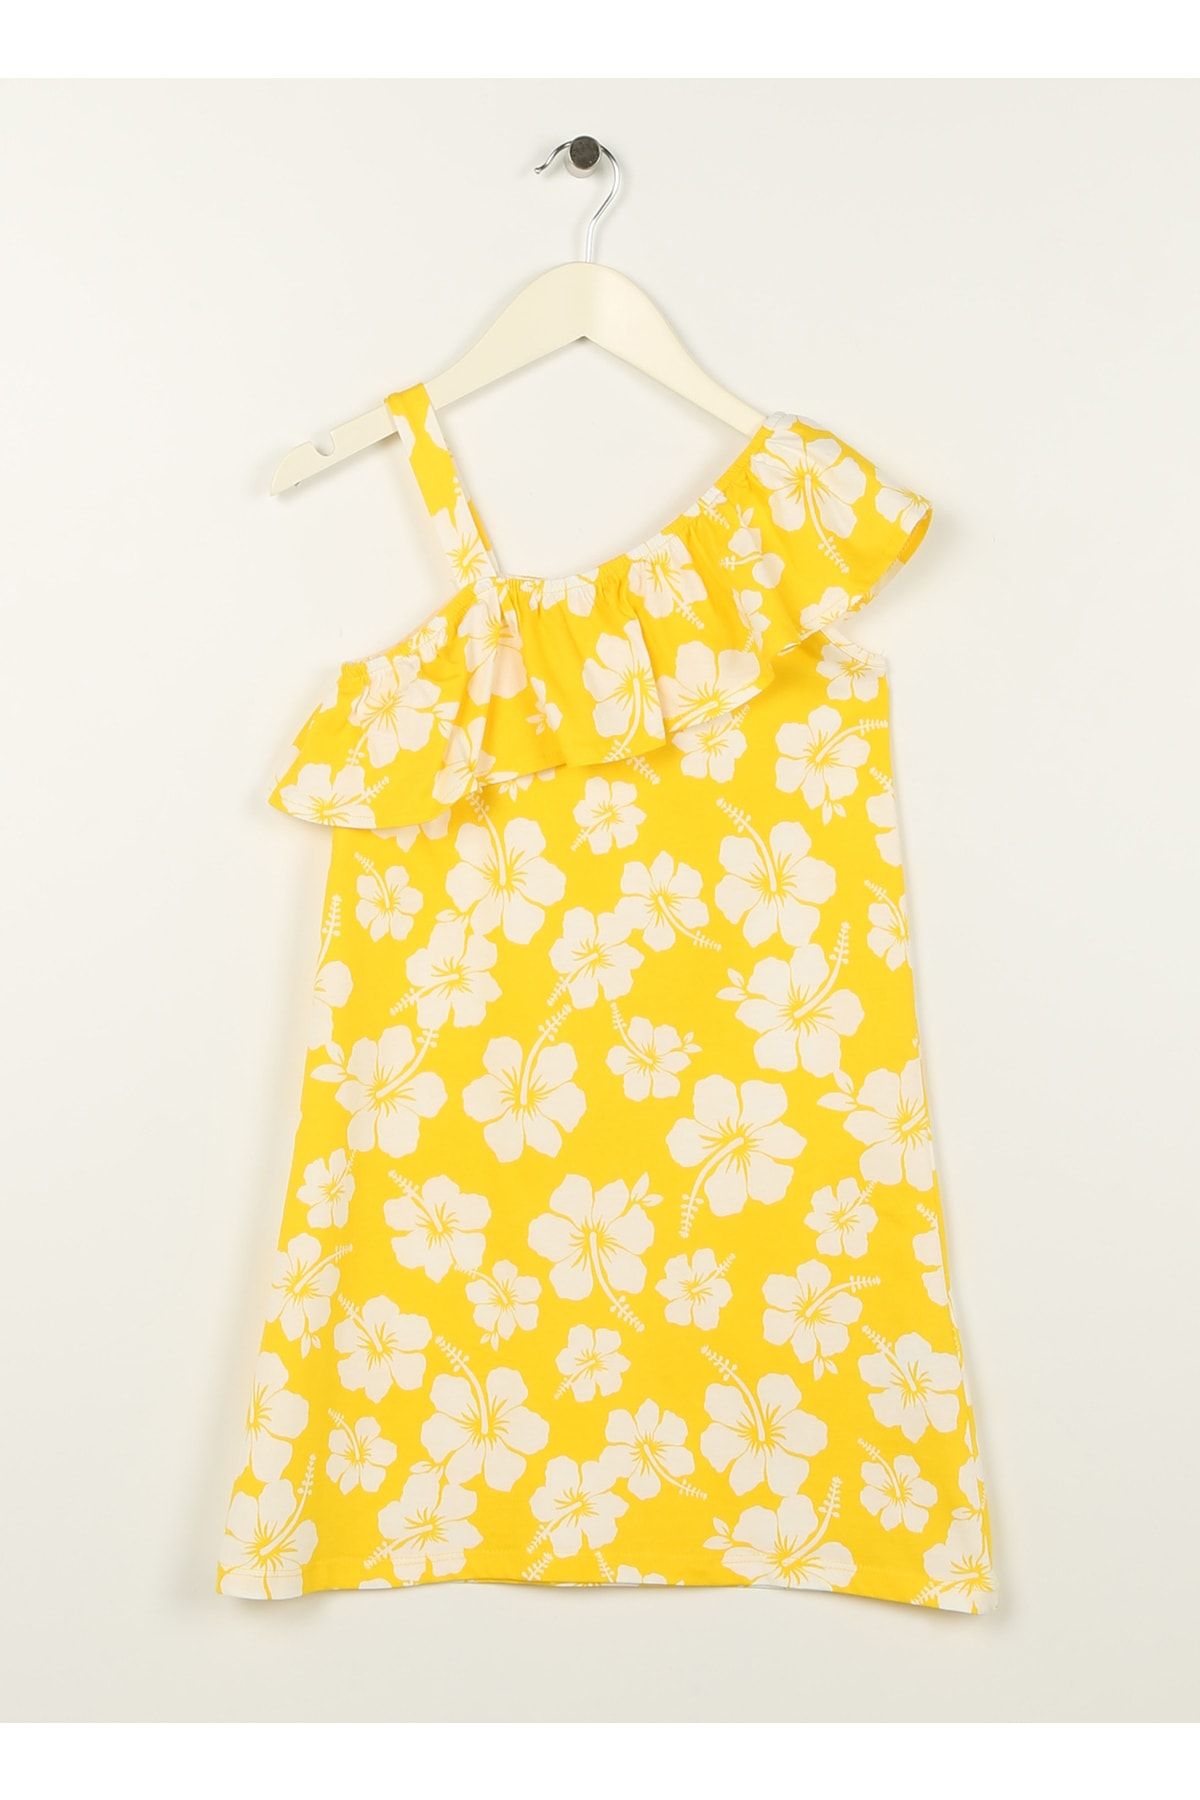 LİMON COMPANY Limon Elbise, 13-14 Yaş, Sarı